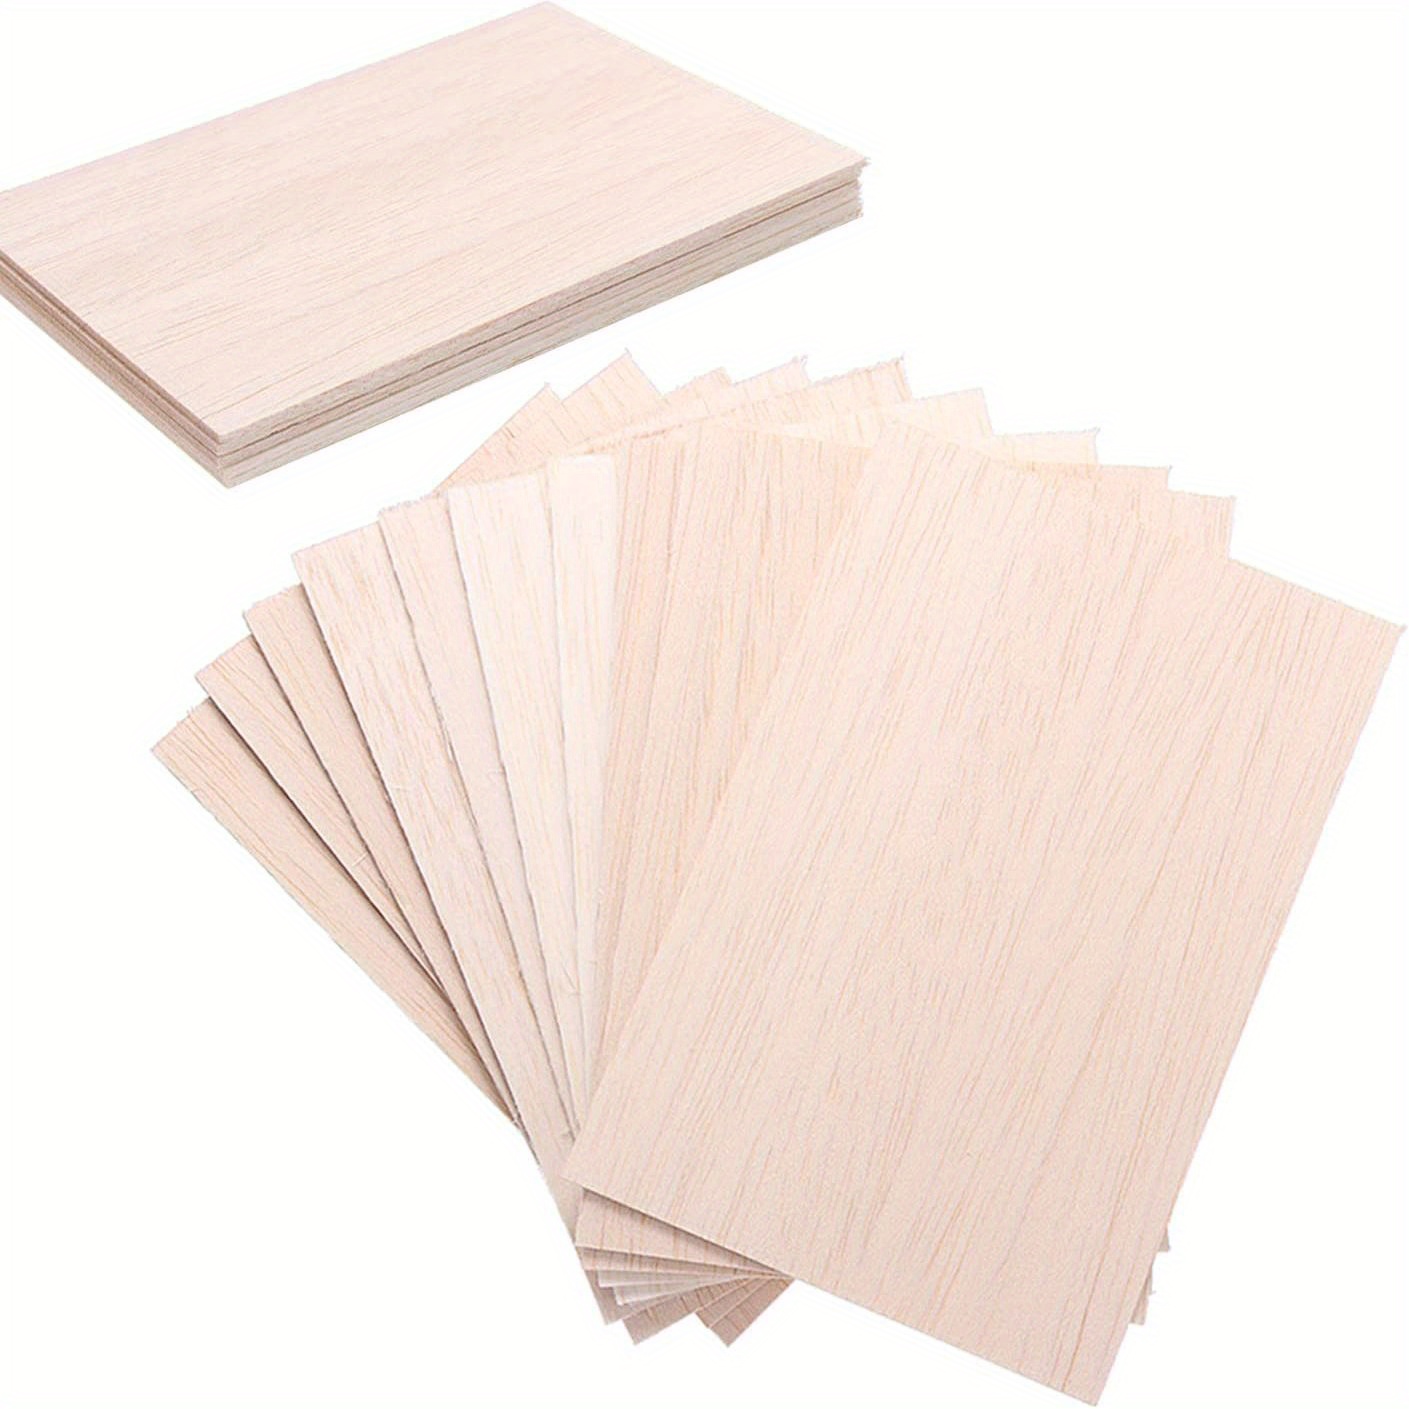 Pack of 5 thin balsa wood sheets, 300 x 200 x 2 mm, balsa wood